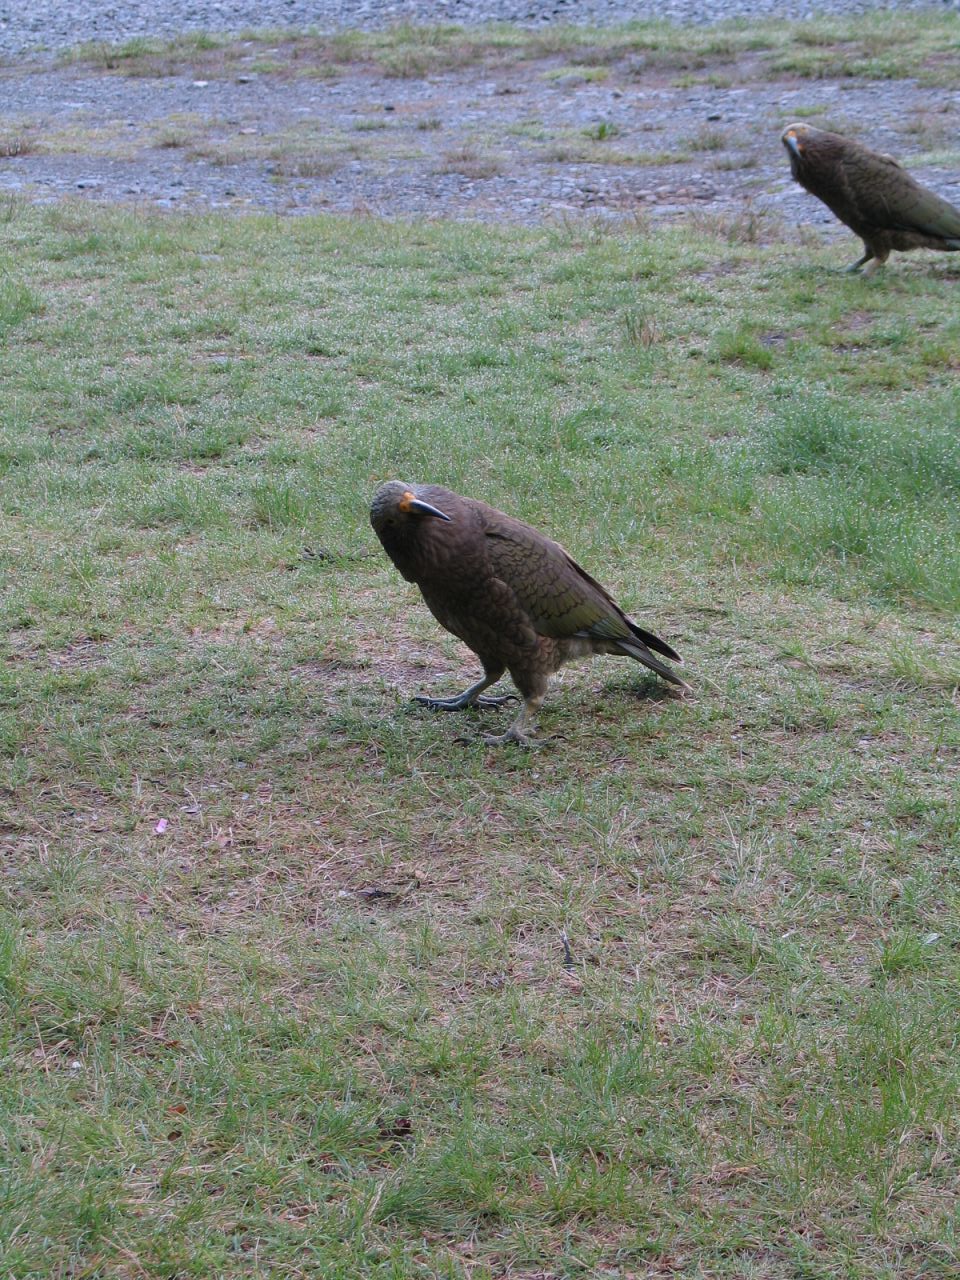 fotka / image prudic kea v Arthur's Pass, New Zealand